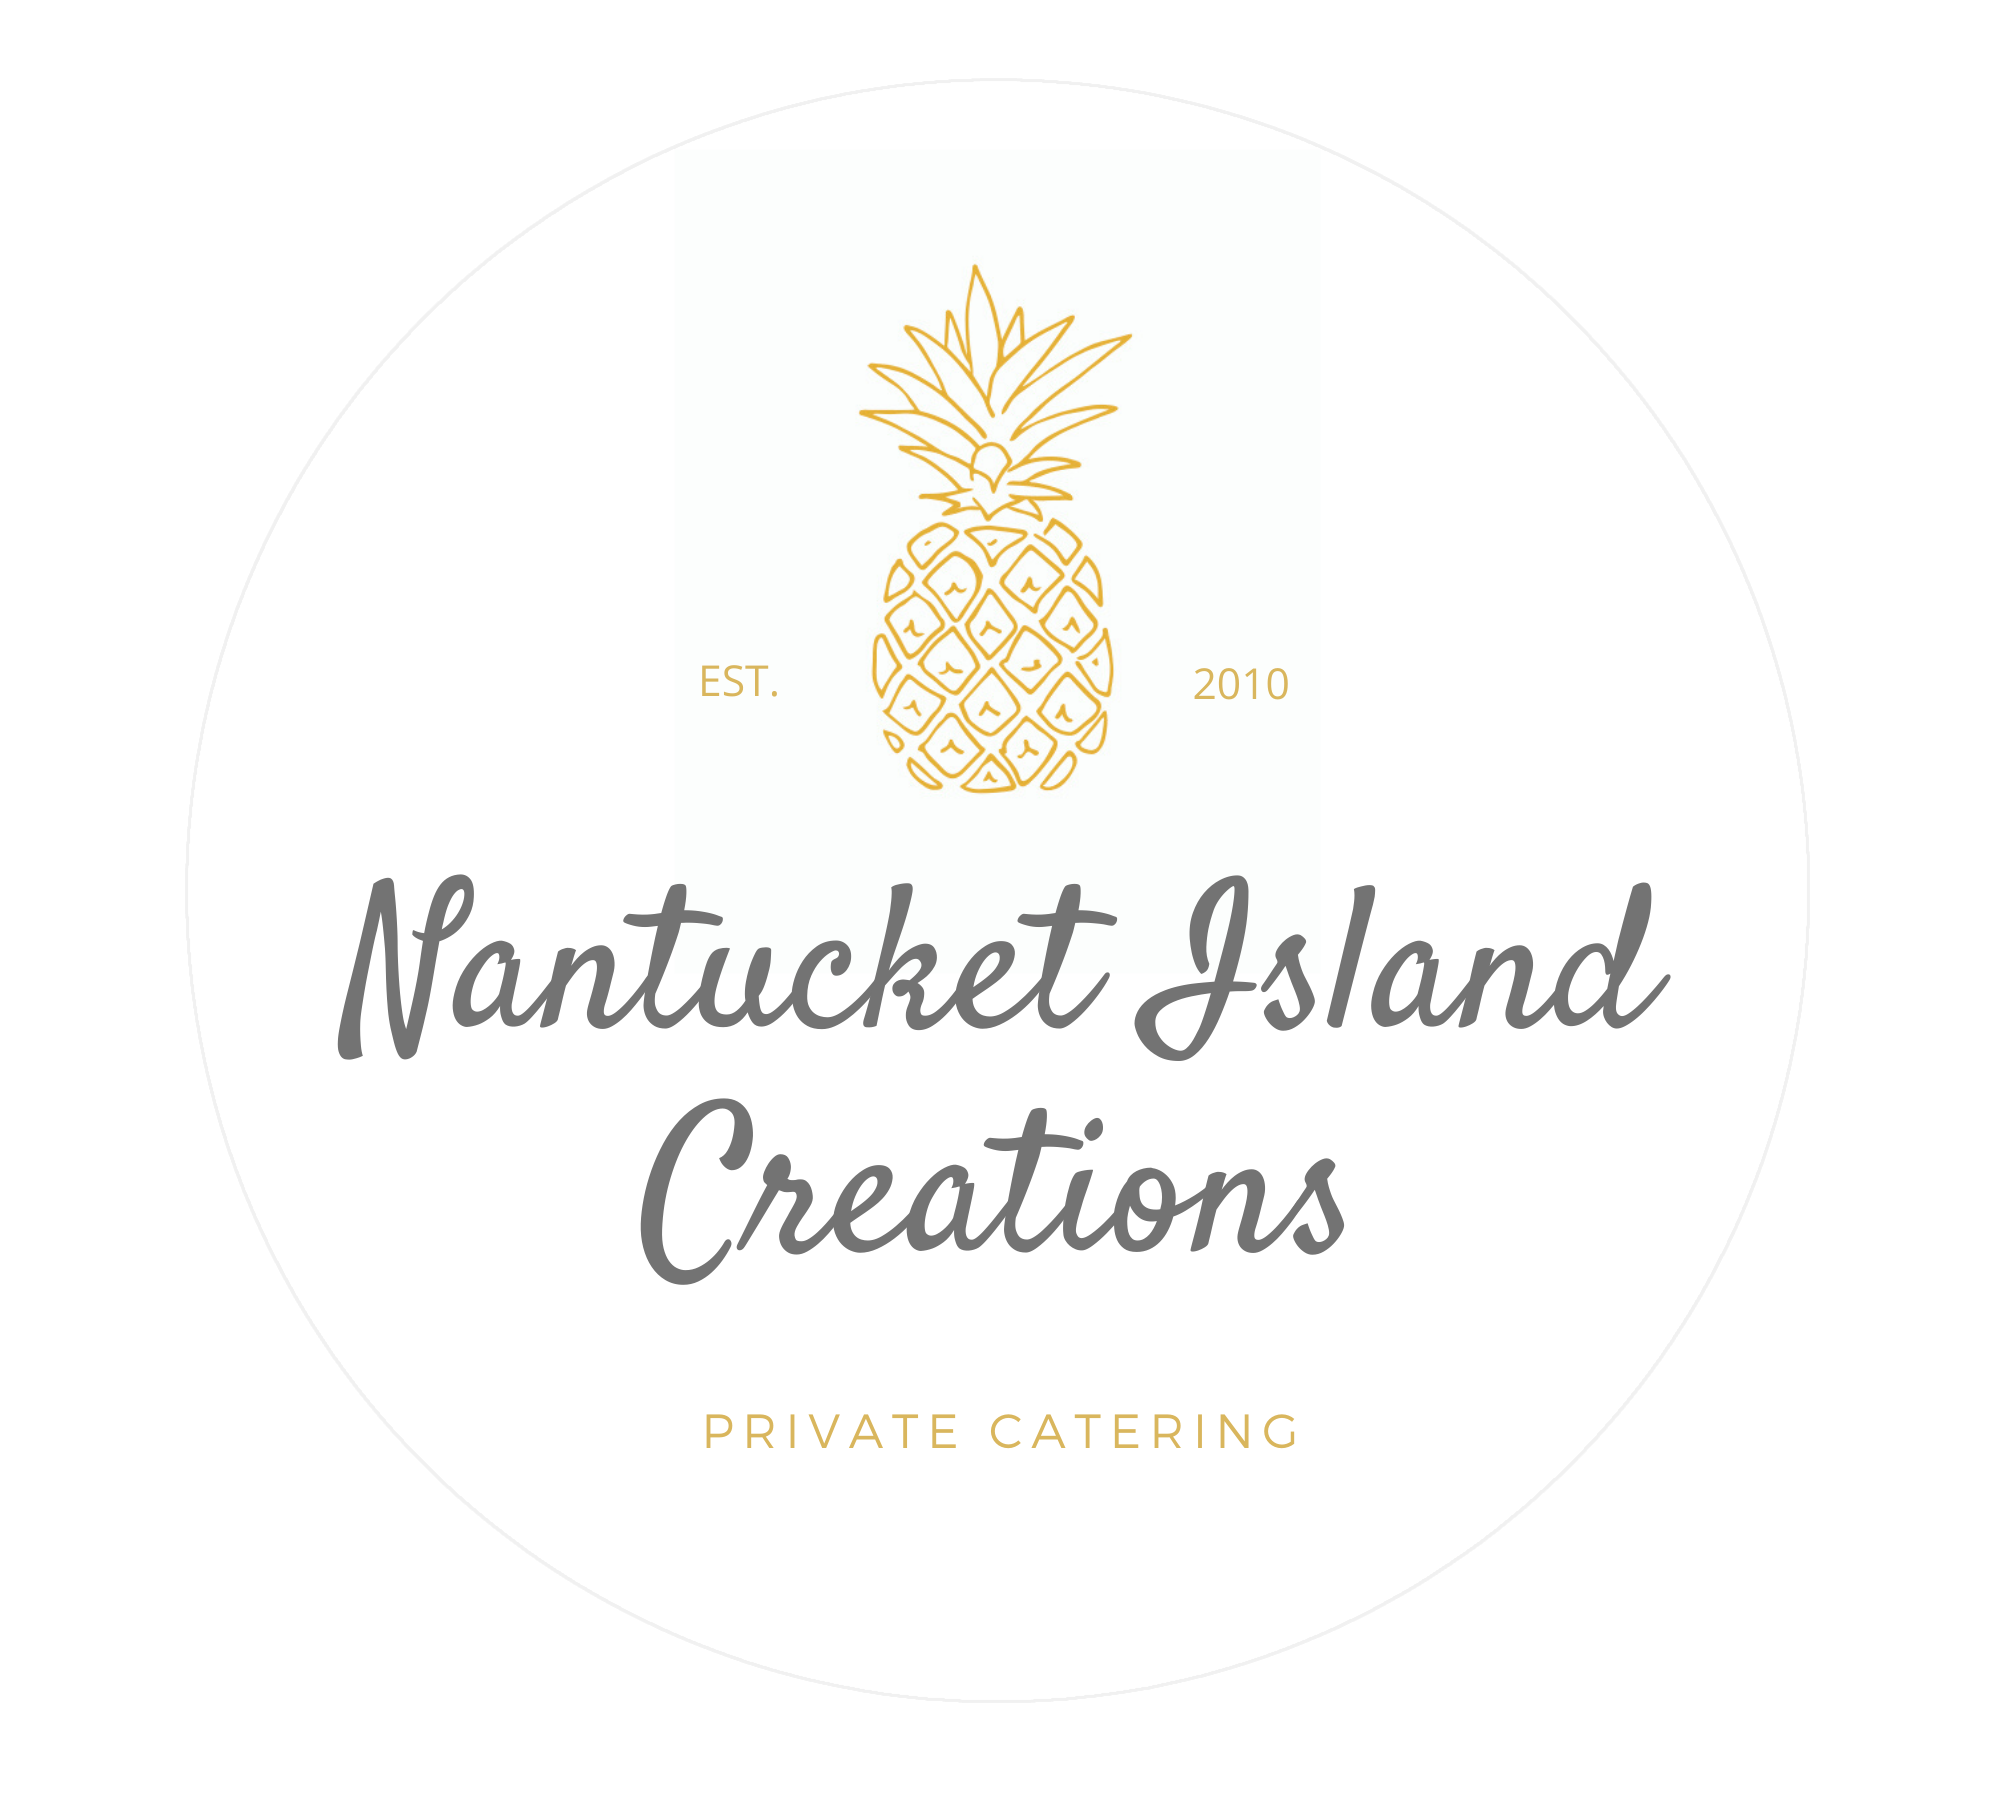 Nantucket Island Creations